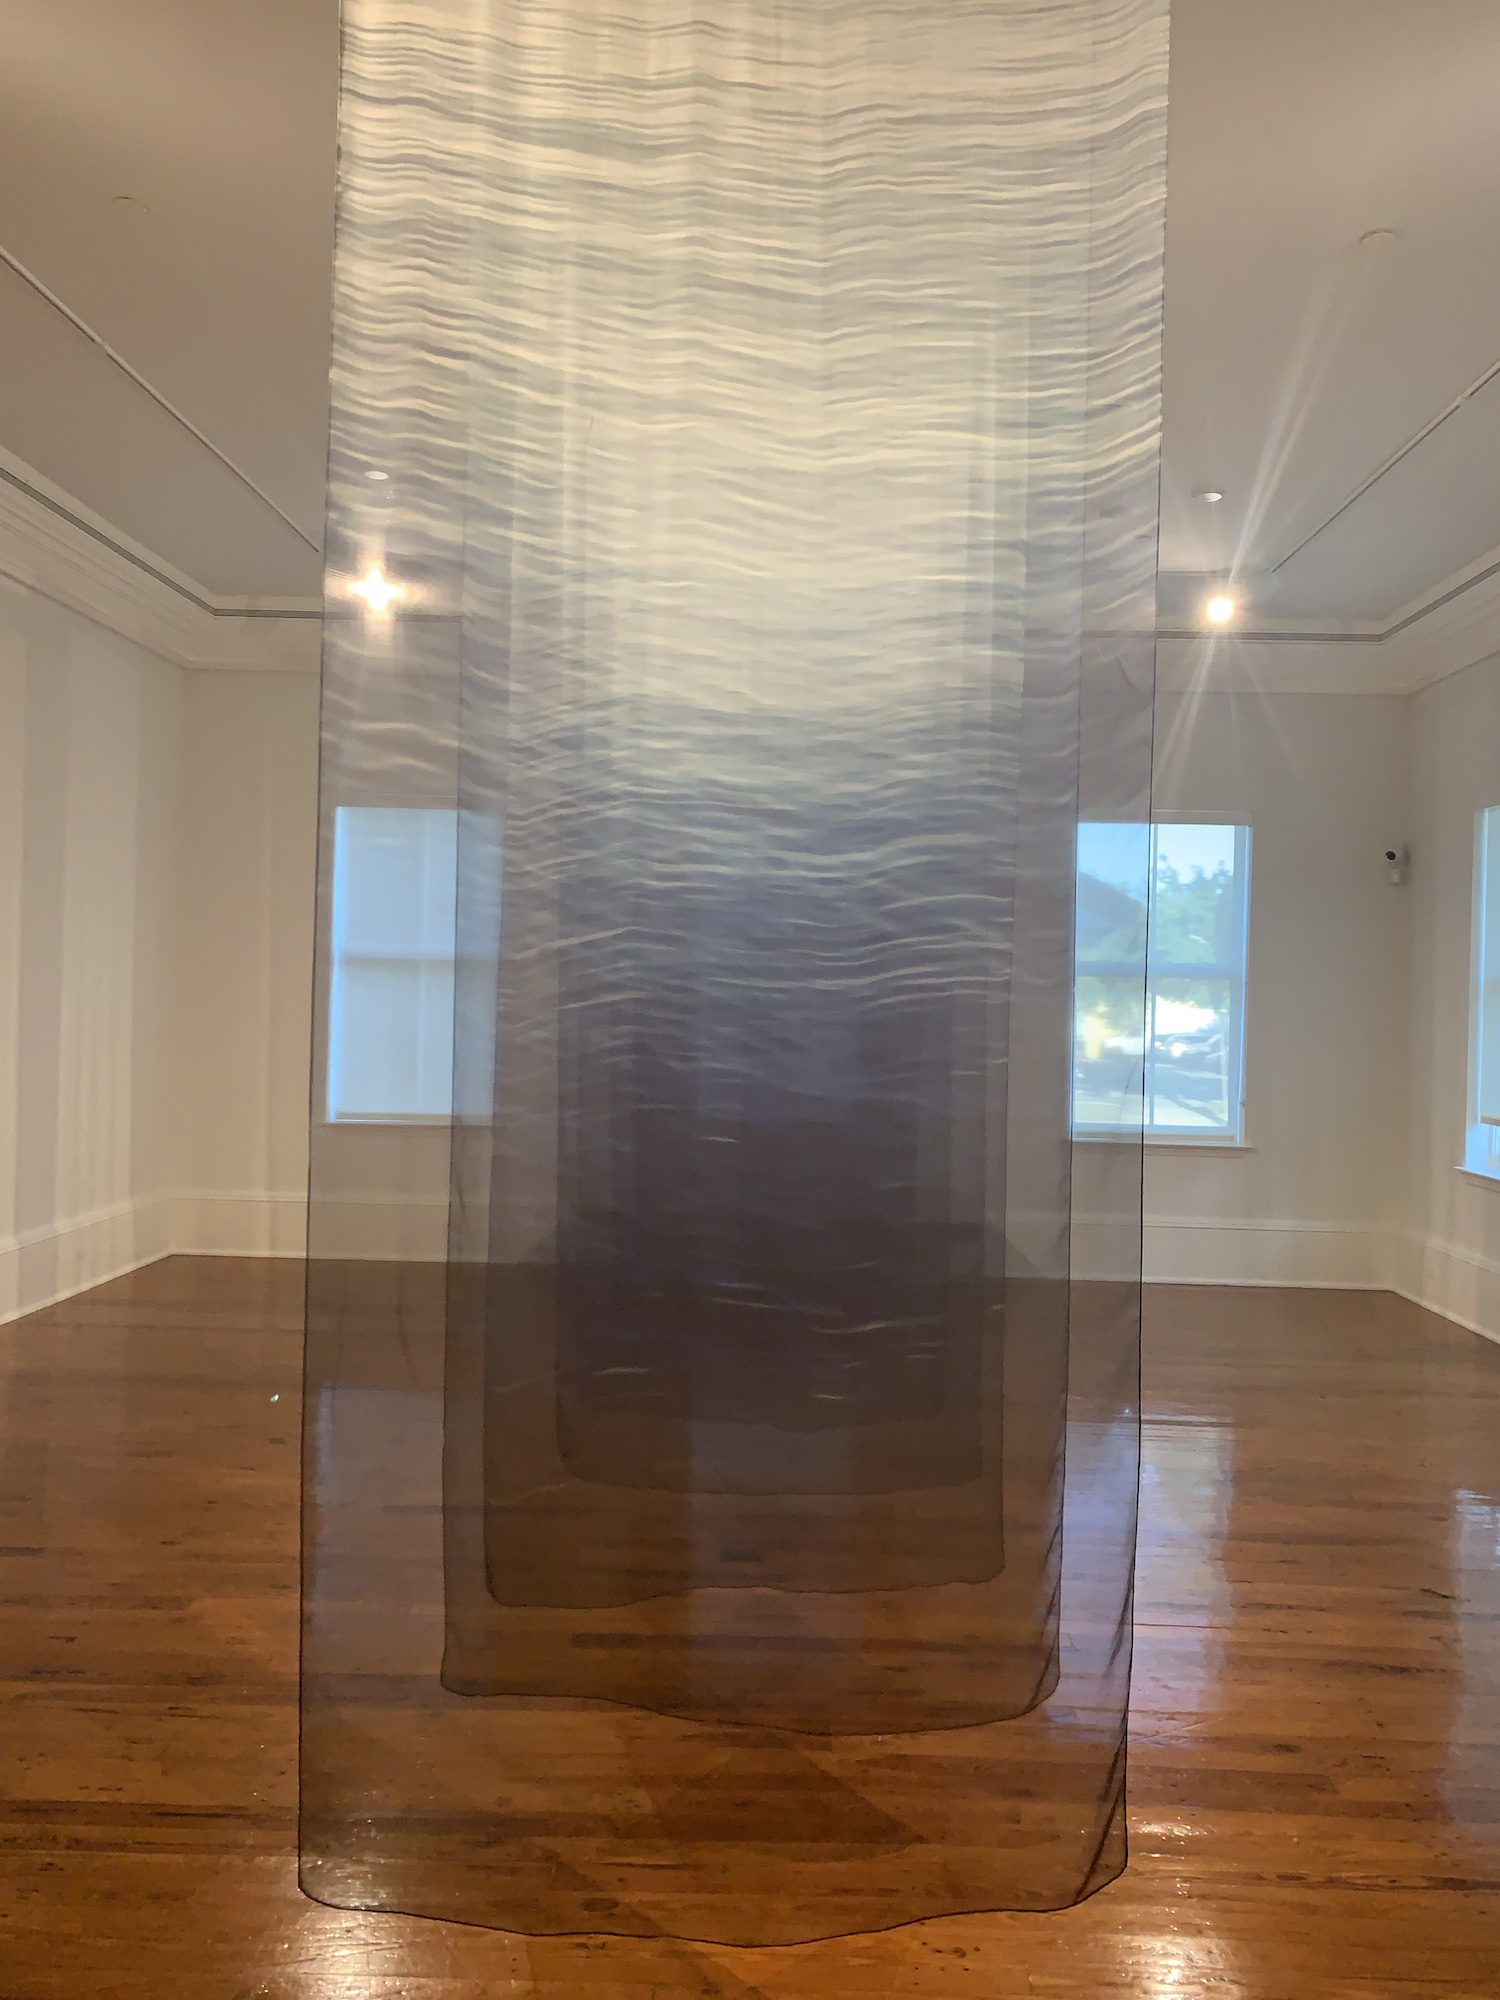  “WAVES BECOMING LIGHT” CORNELL ART MUSEUM, 2019 